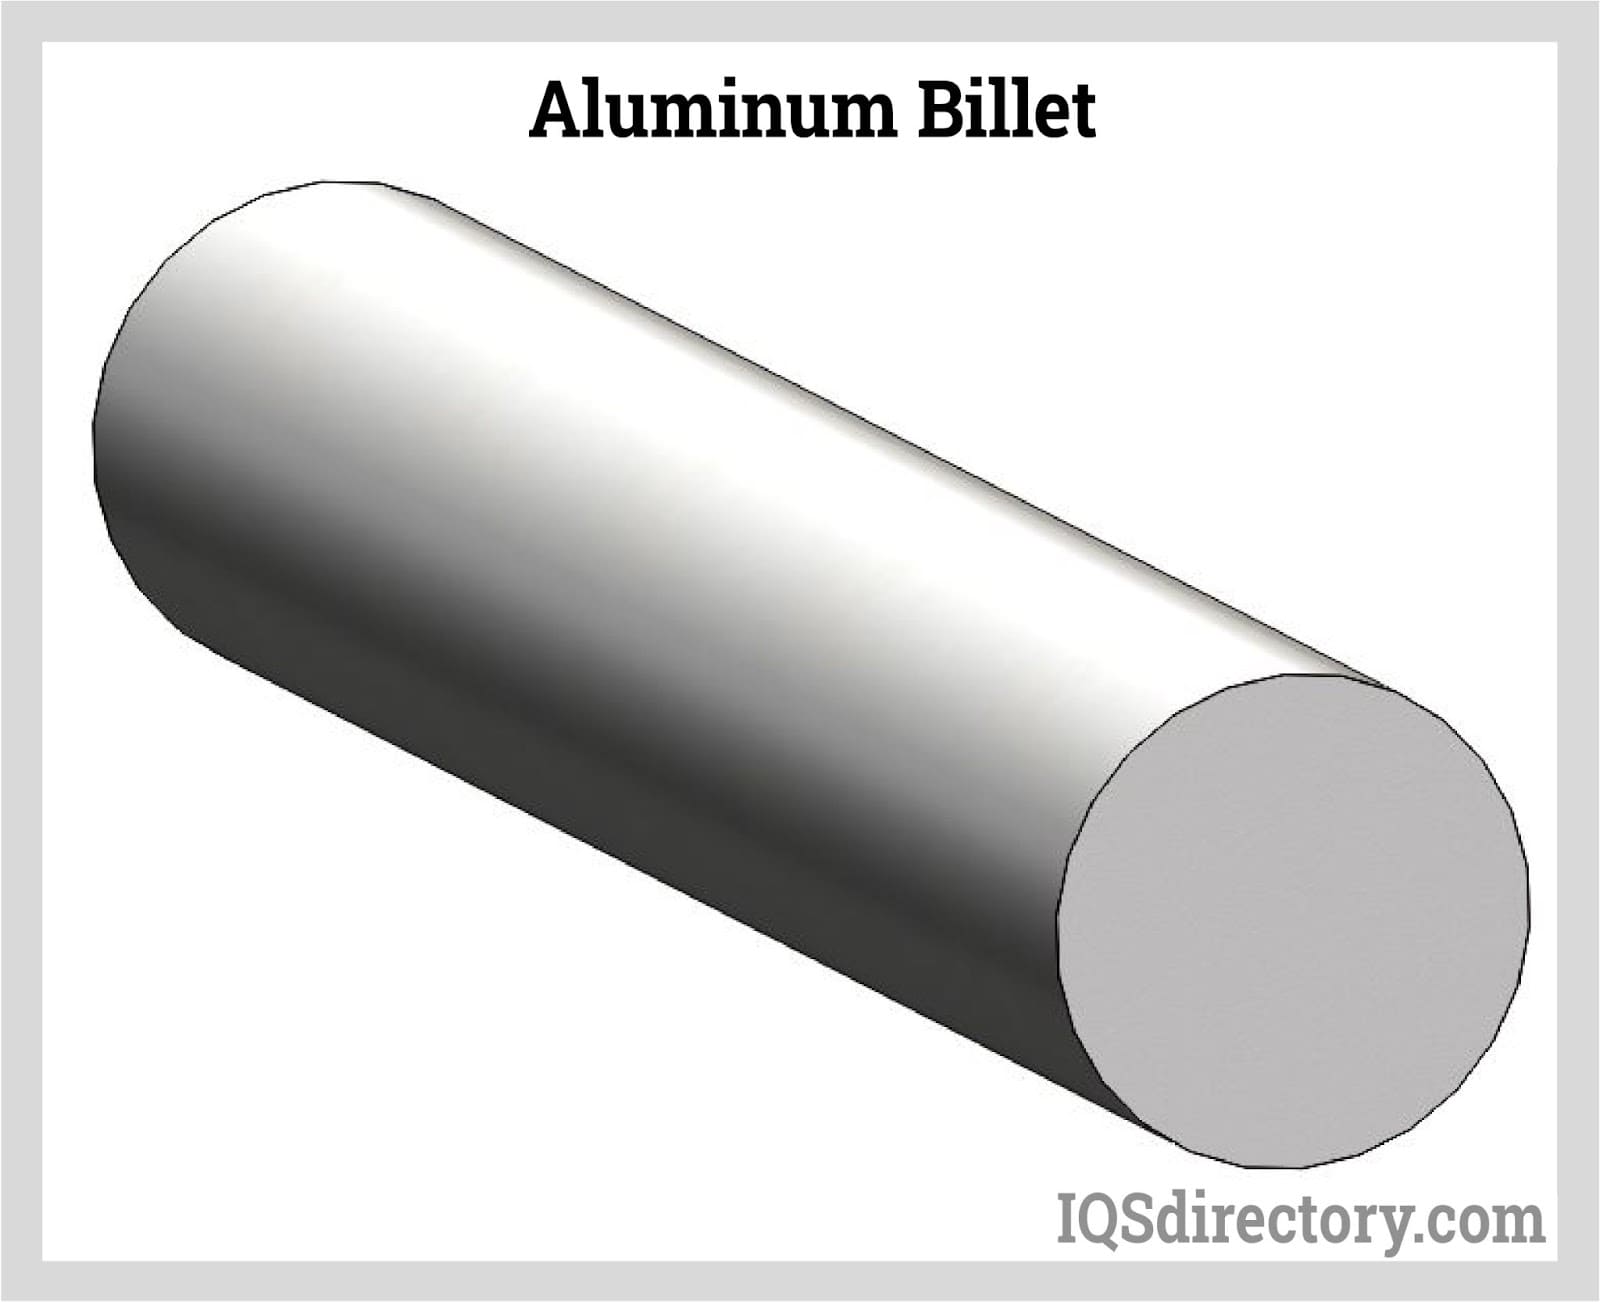 Aluminum Billet